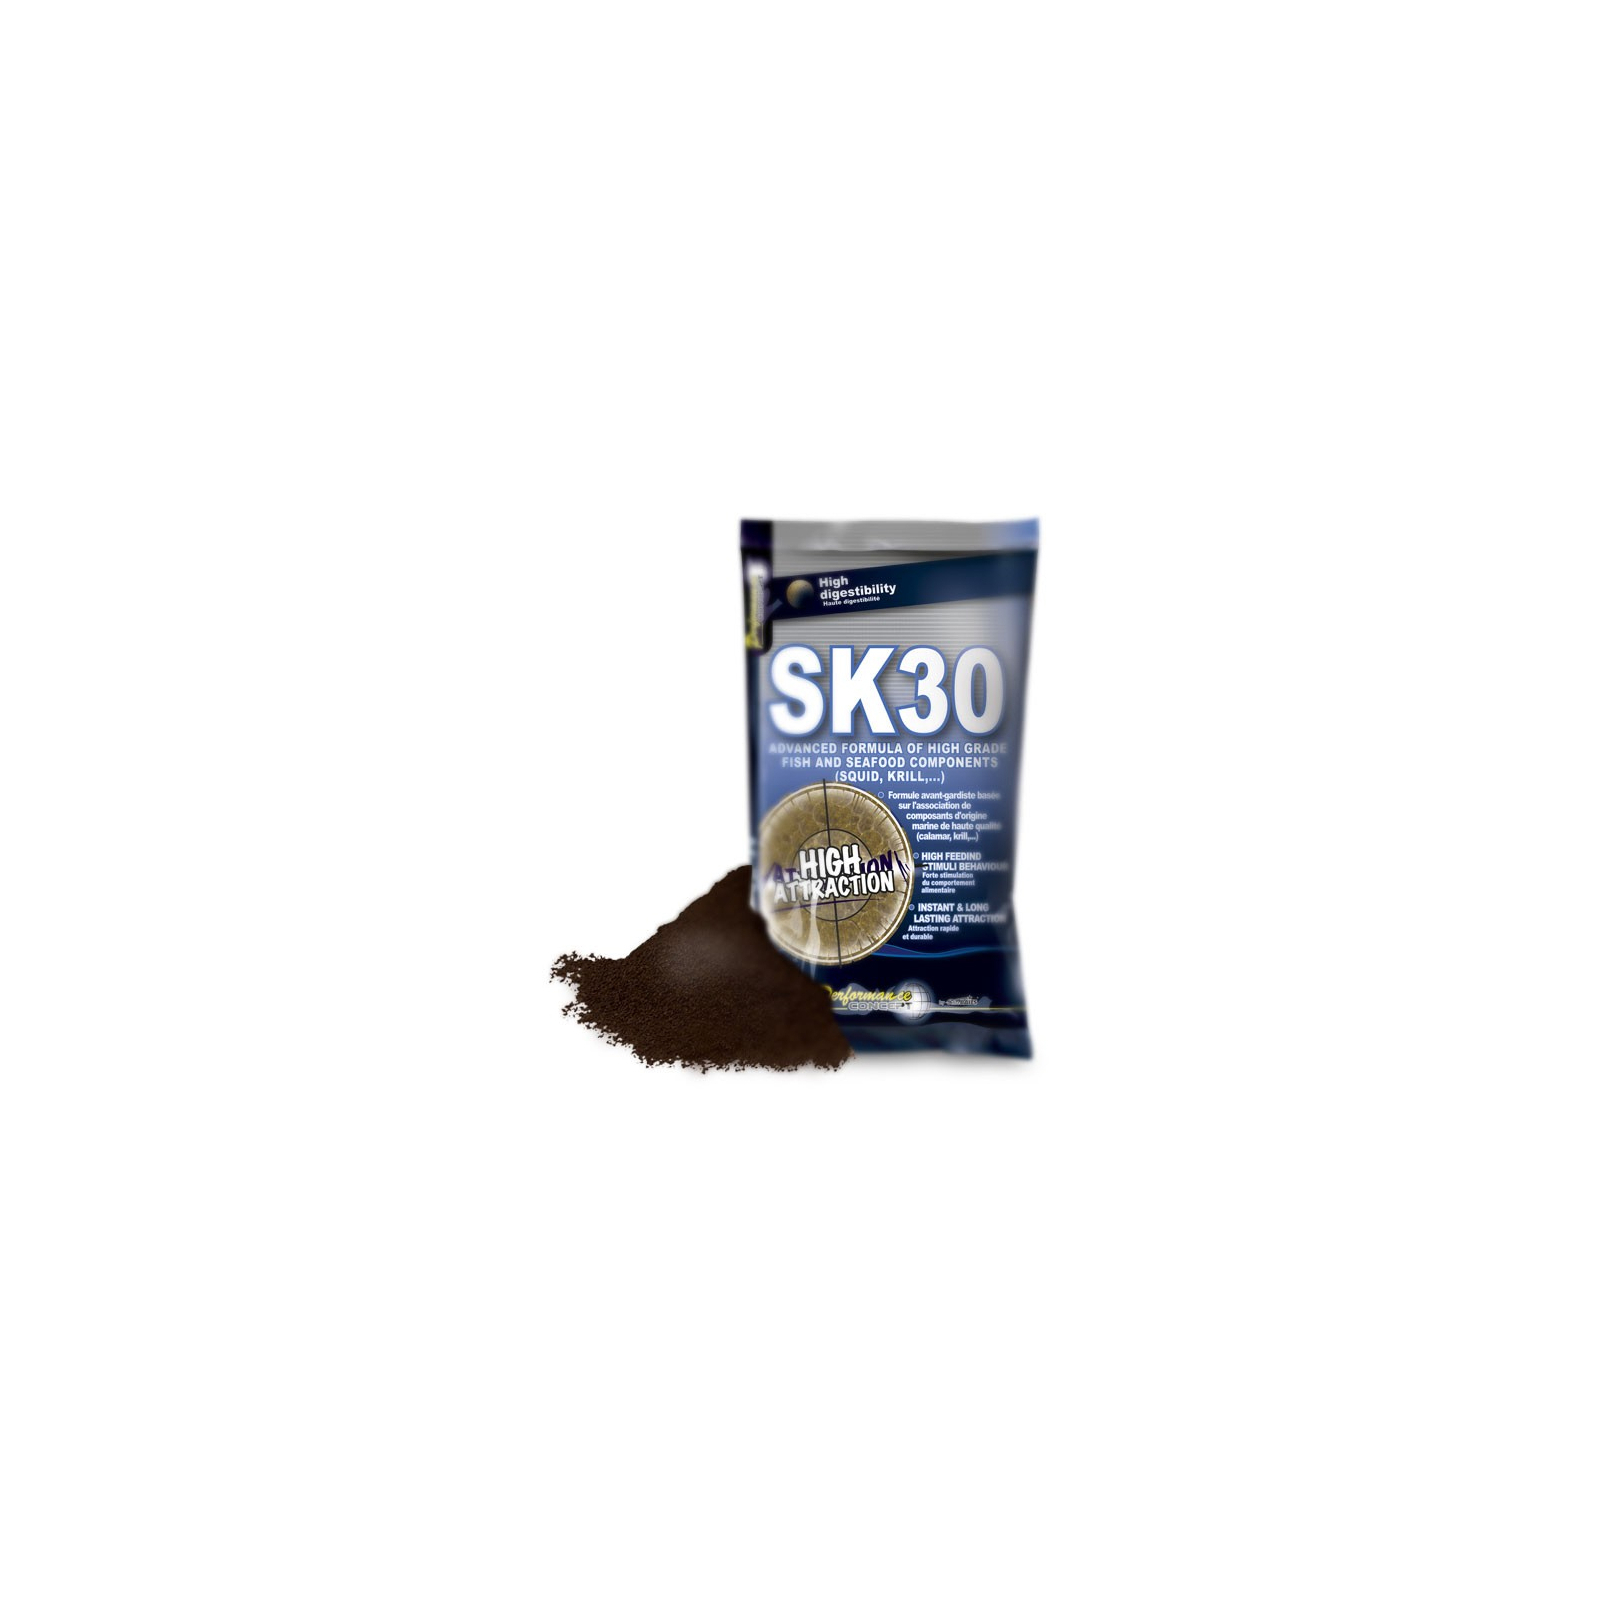 Прикормка Starbaits SK30 Stick mix 1кг. (32.59.49)